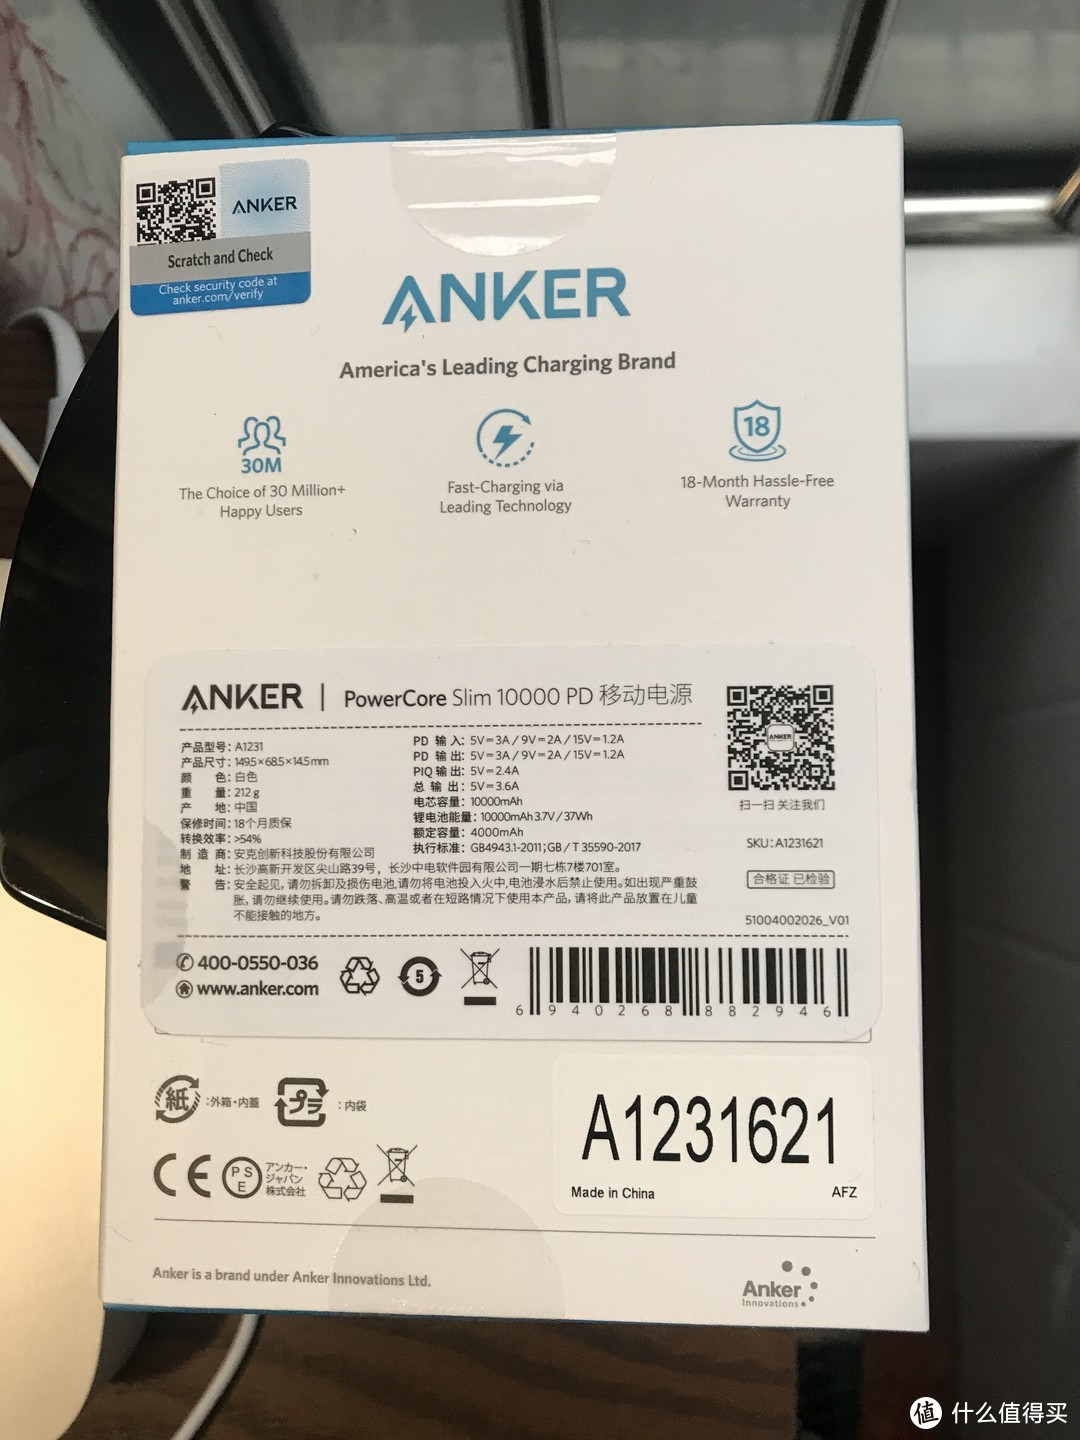 PowerCore Slim 10000 PD移动电源——Anker充电宝入手体验